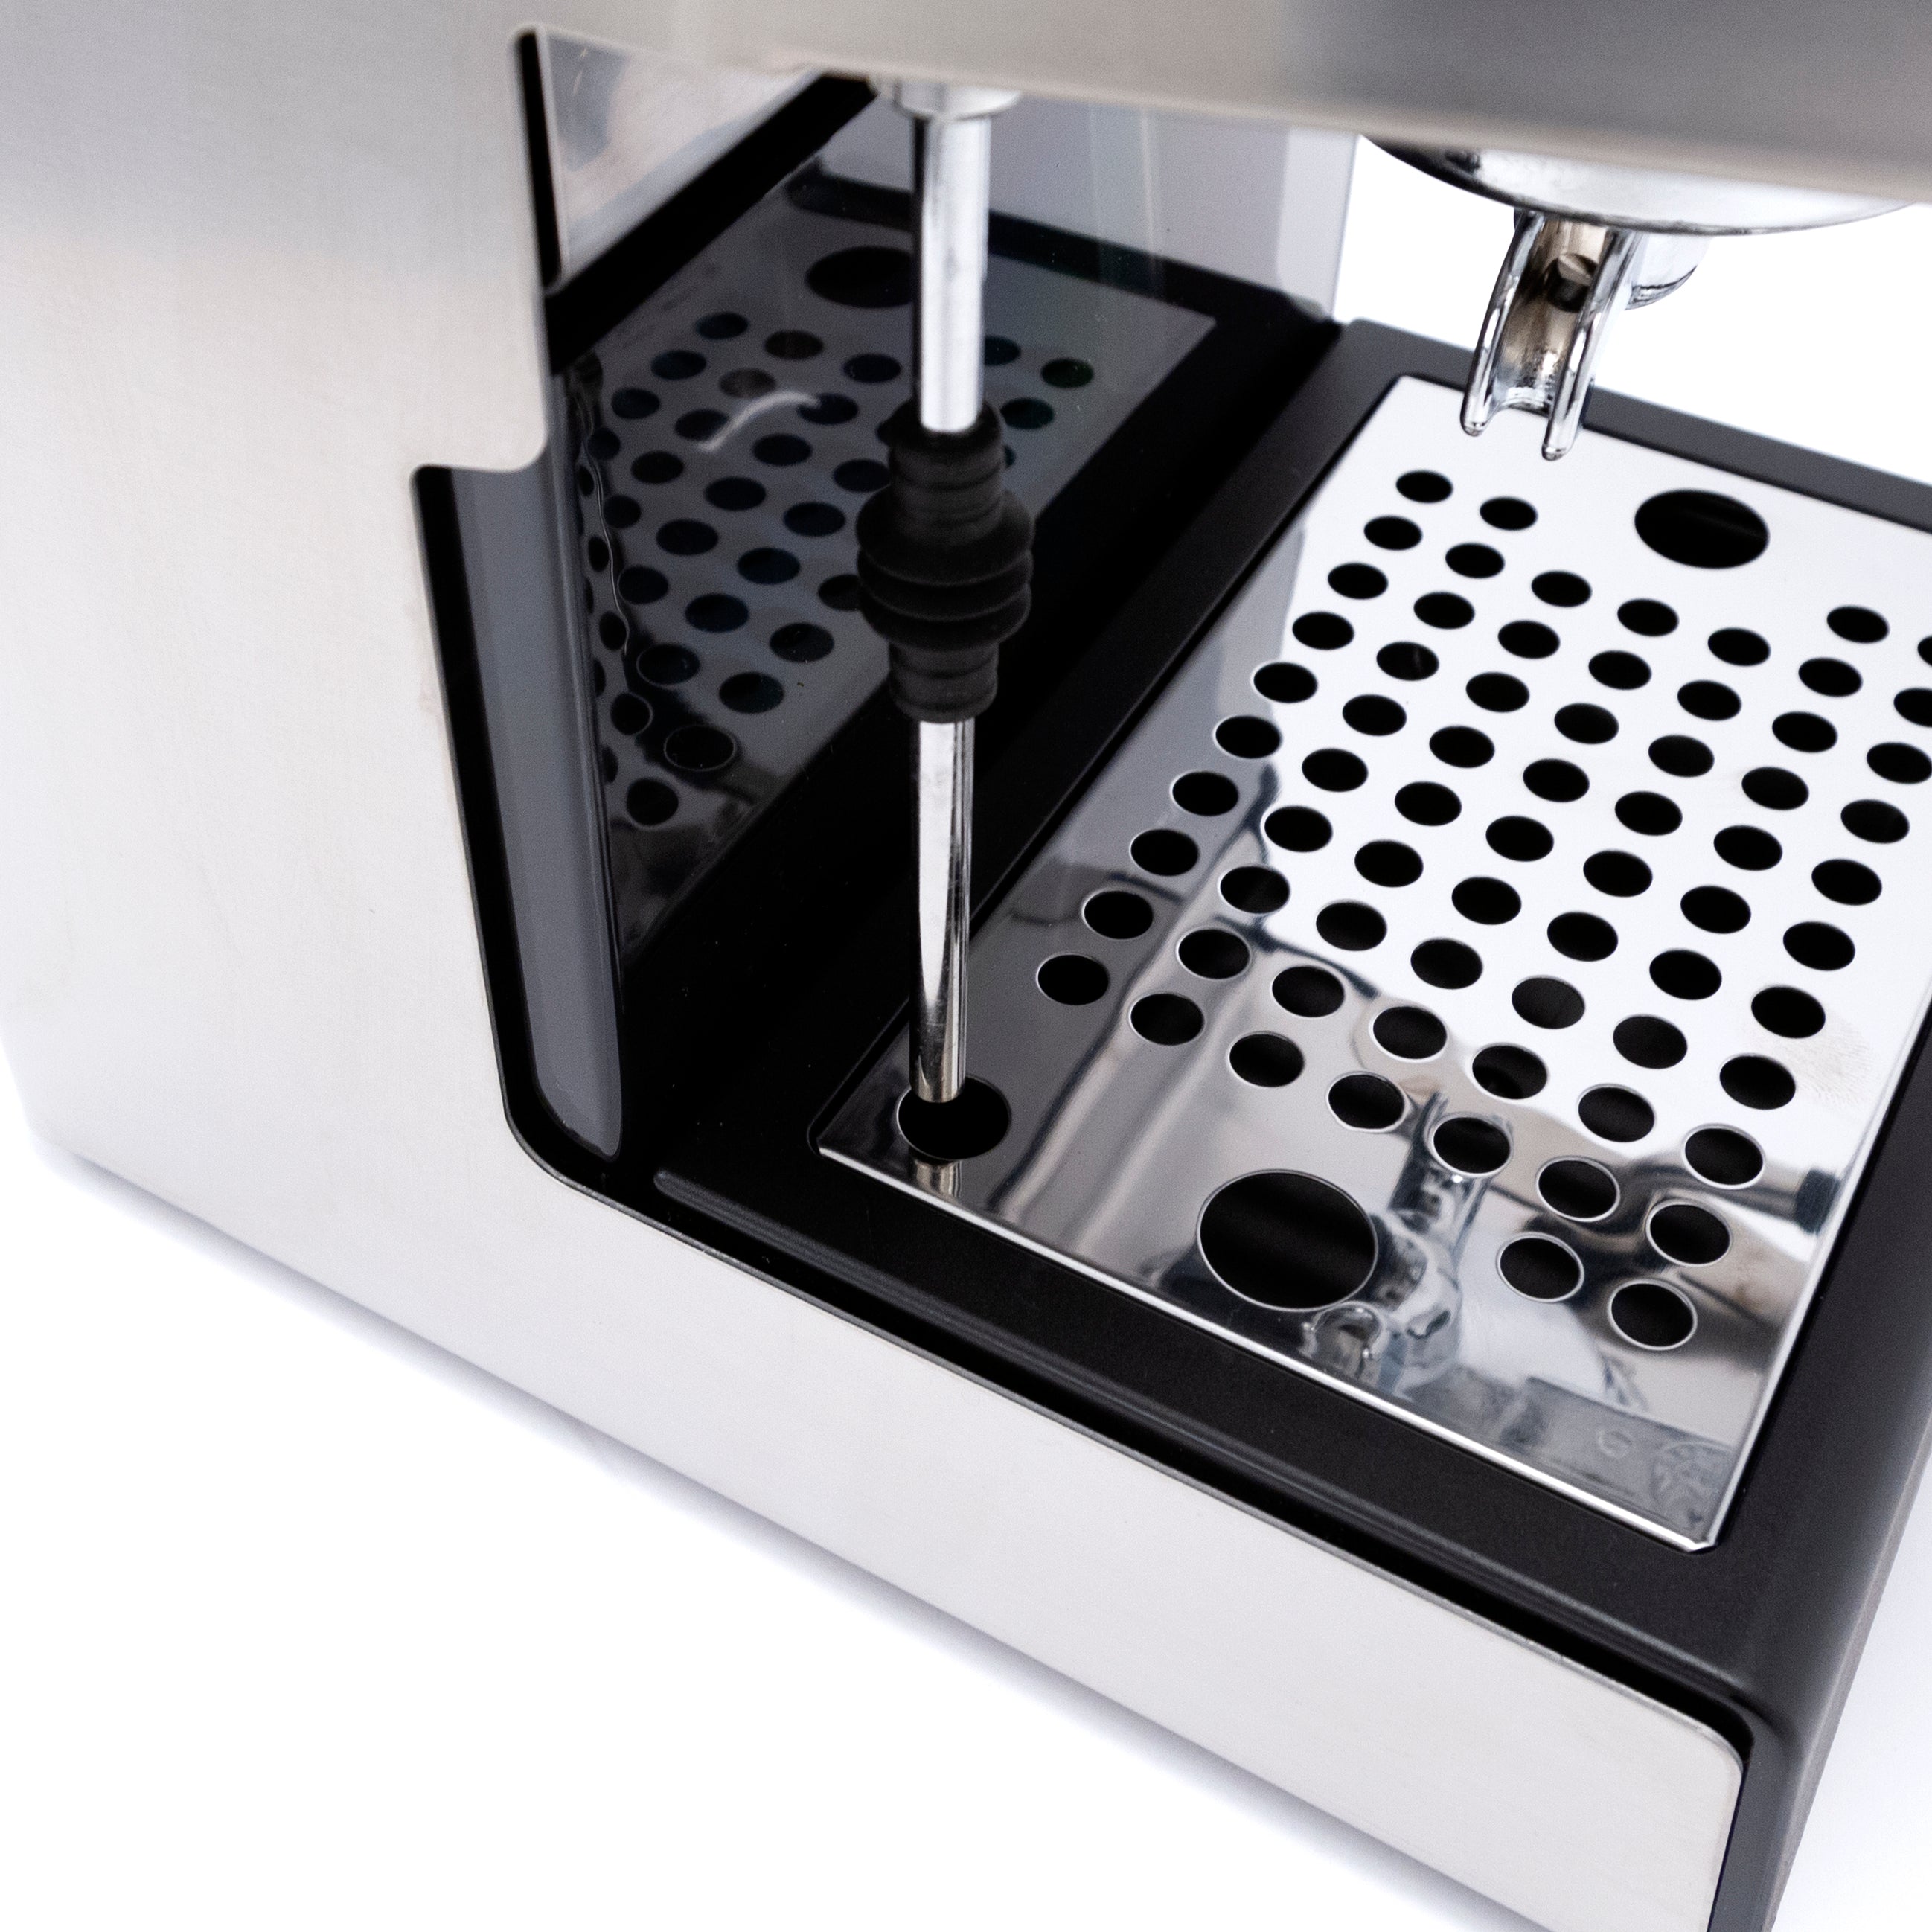 Gaggia Classic Pro stainless steel espresso machine drip tray